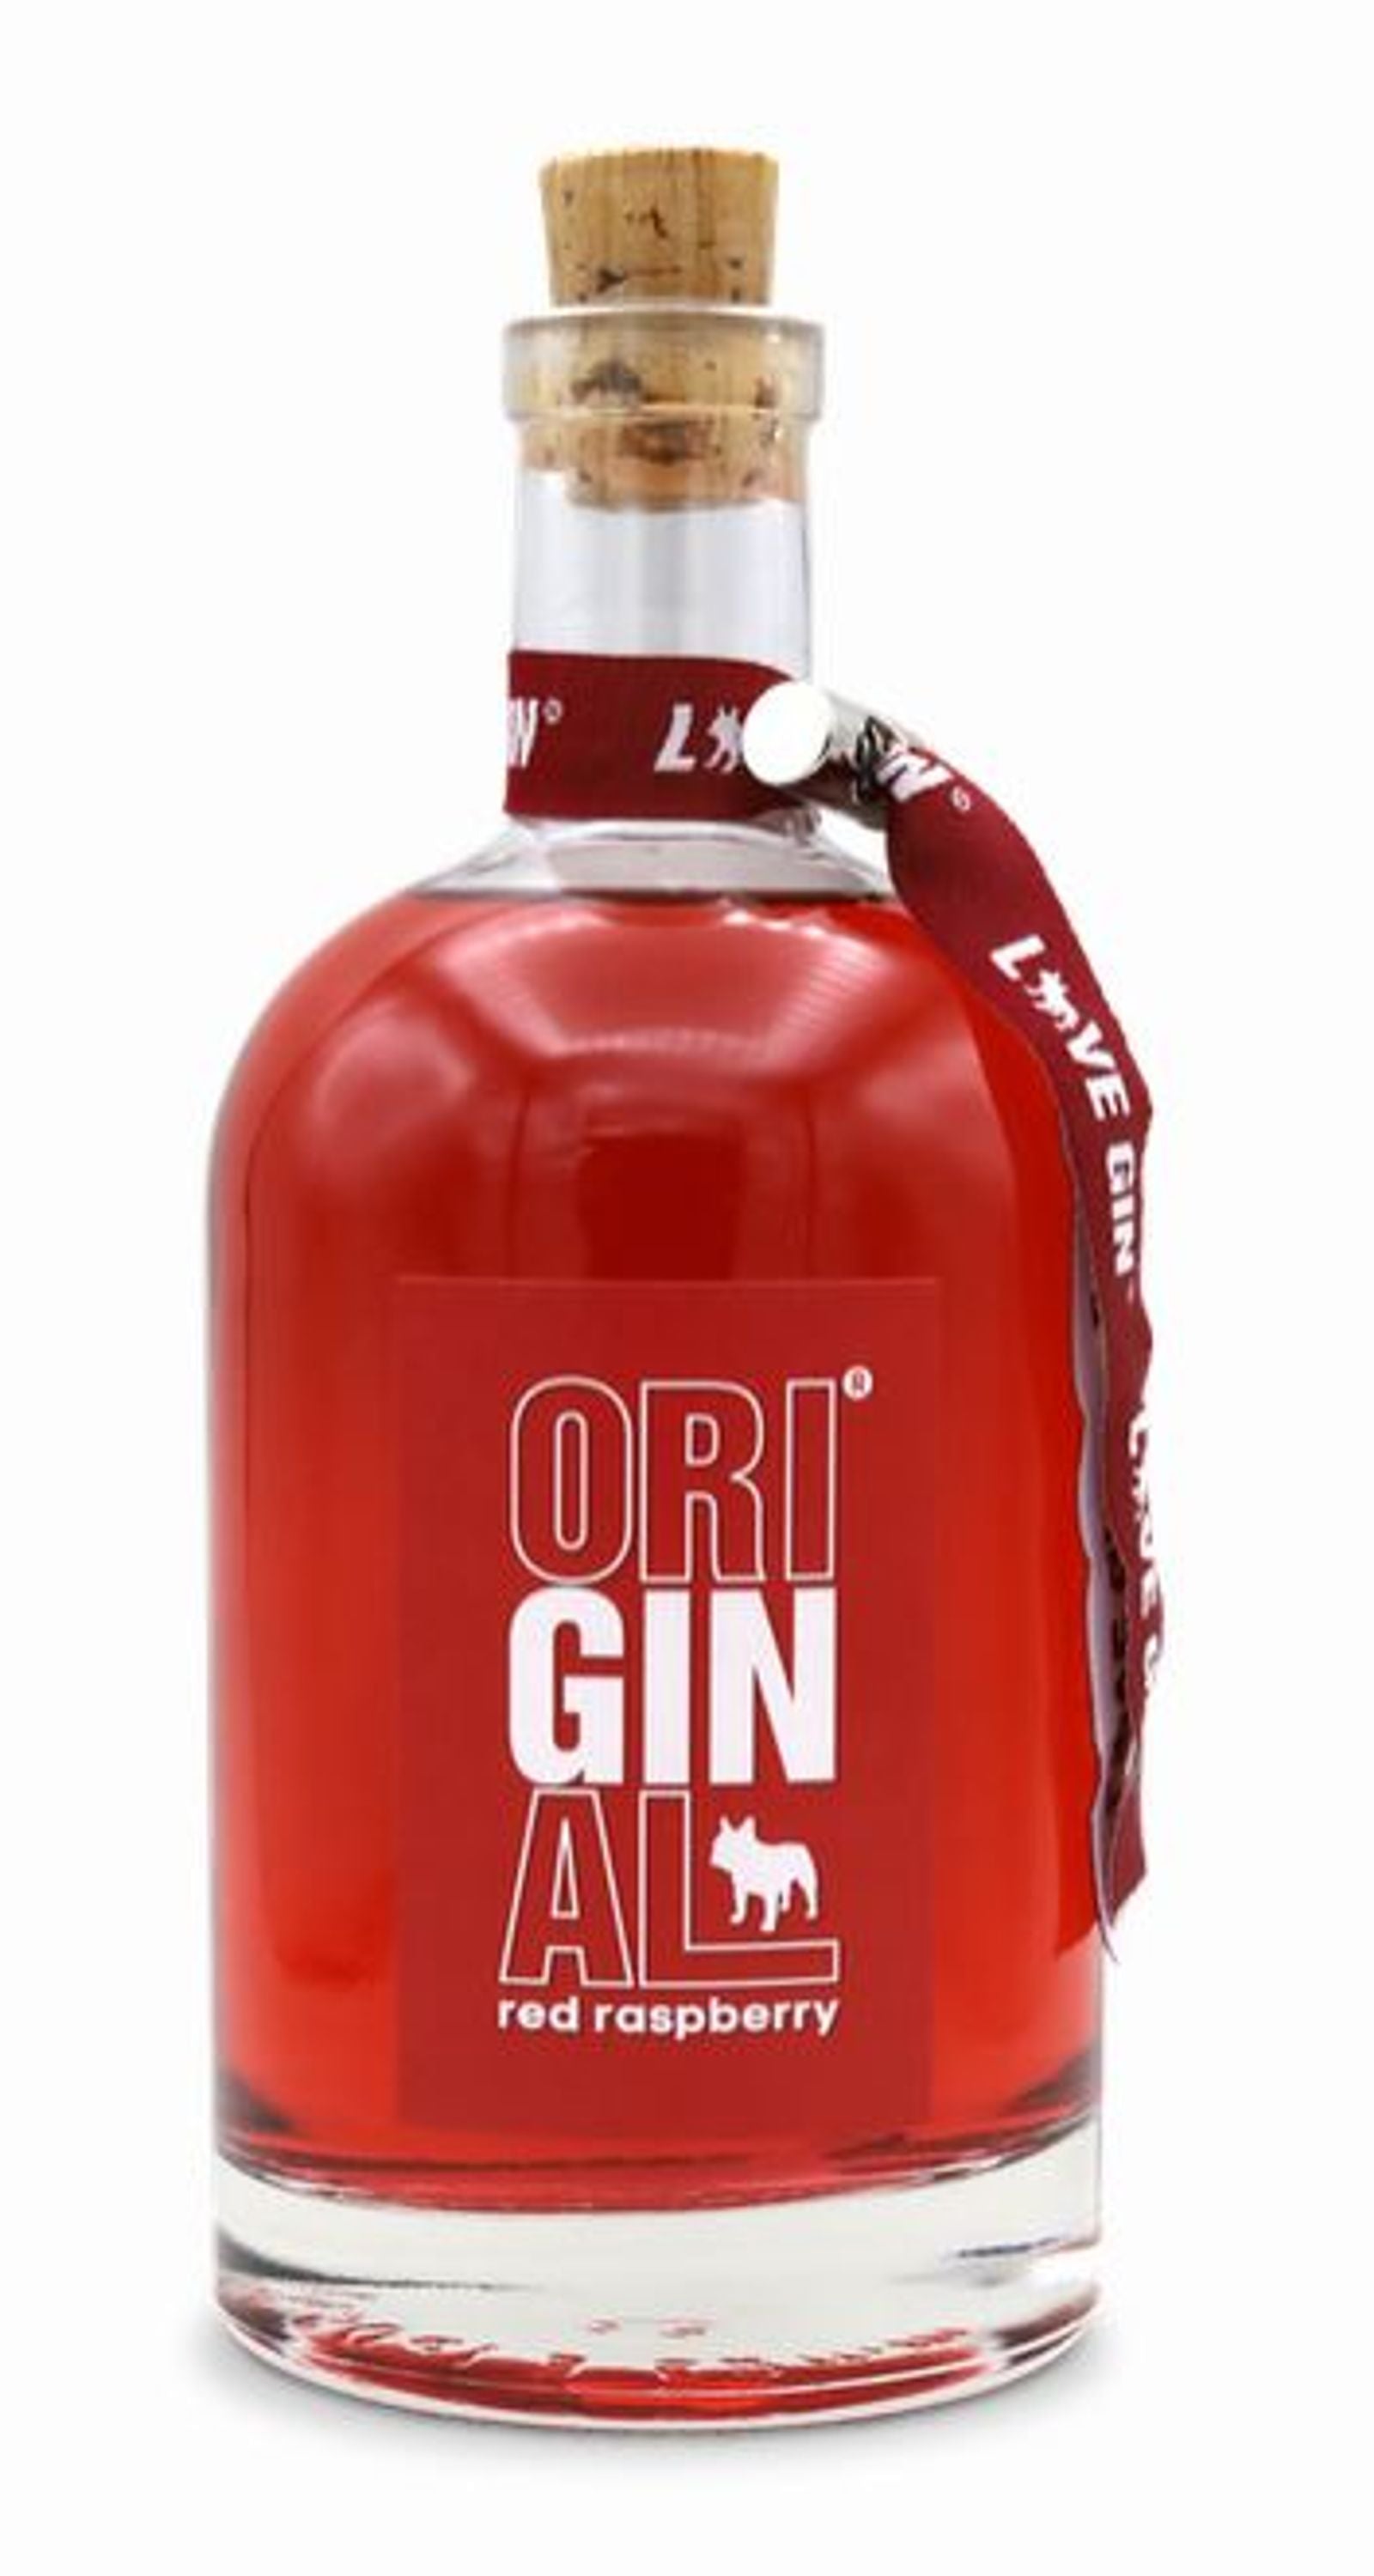 Original Love Gin red raspberry 0,5l, alc. 37.5% by volume, Gin Germany